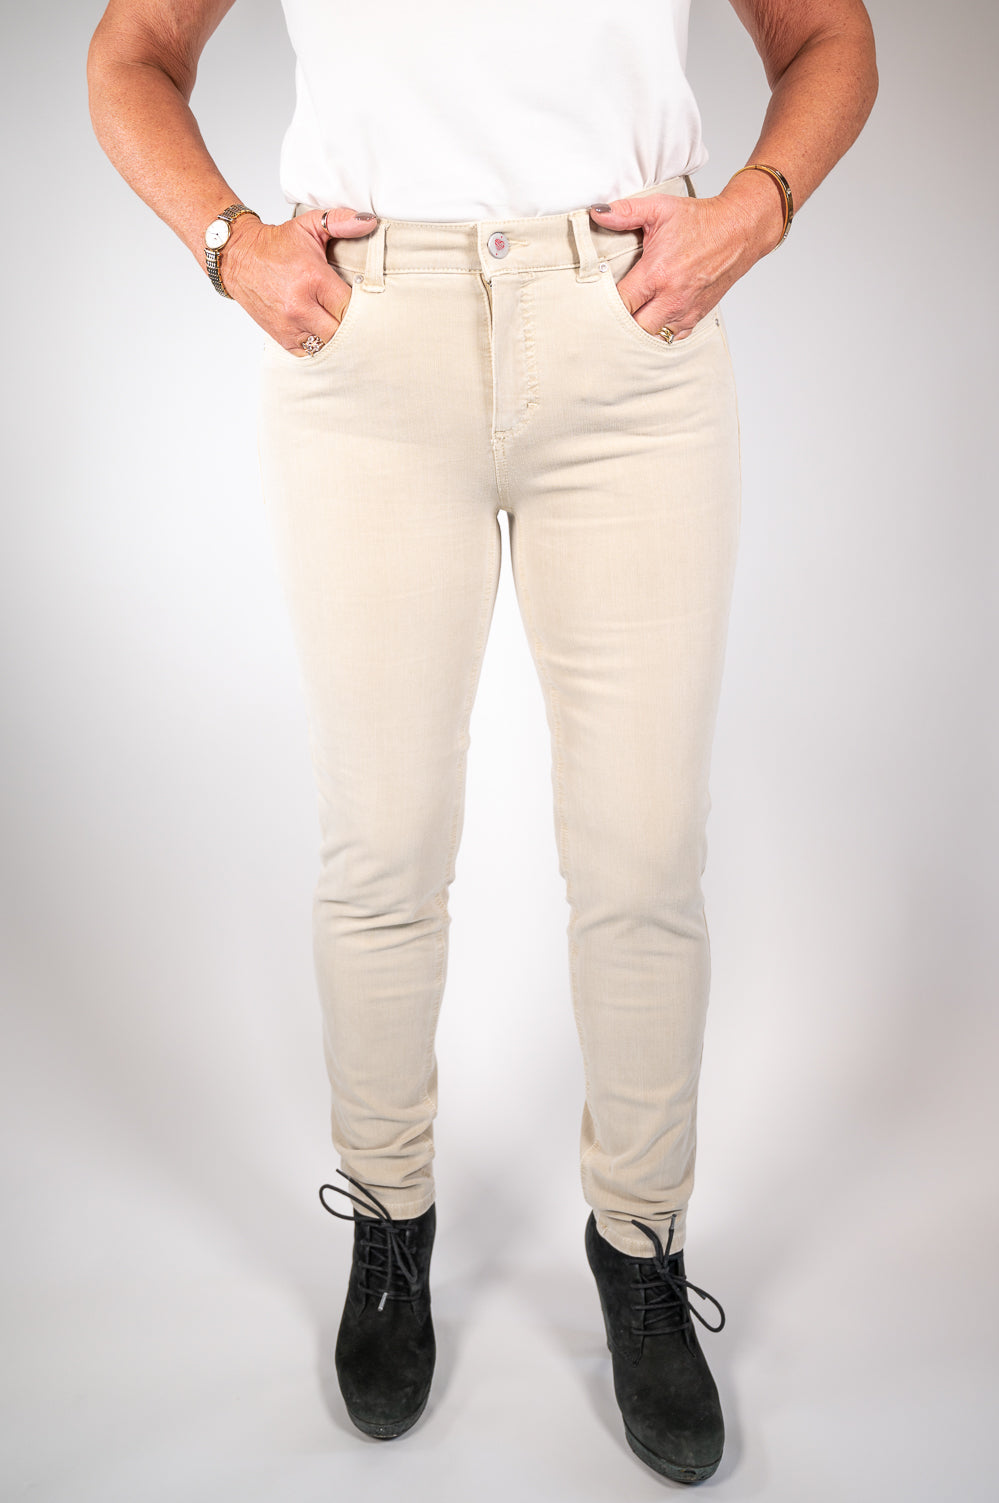 Anna Montana Skinny Jeans - Beige 5052